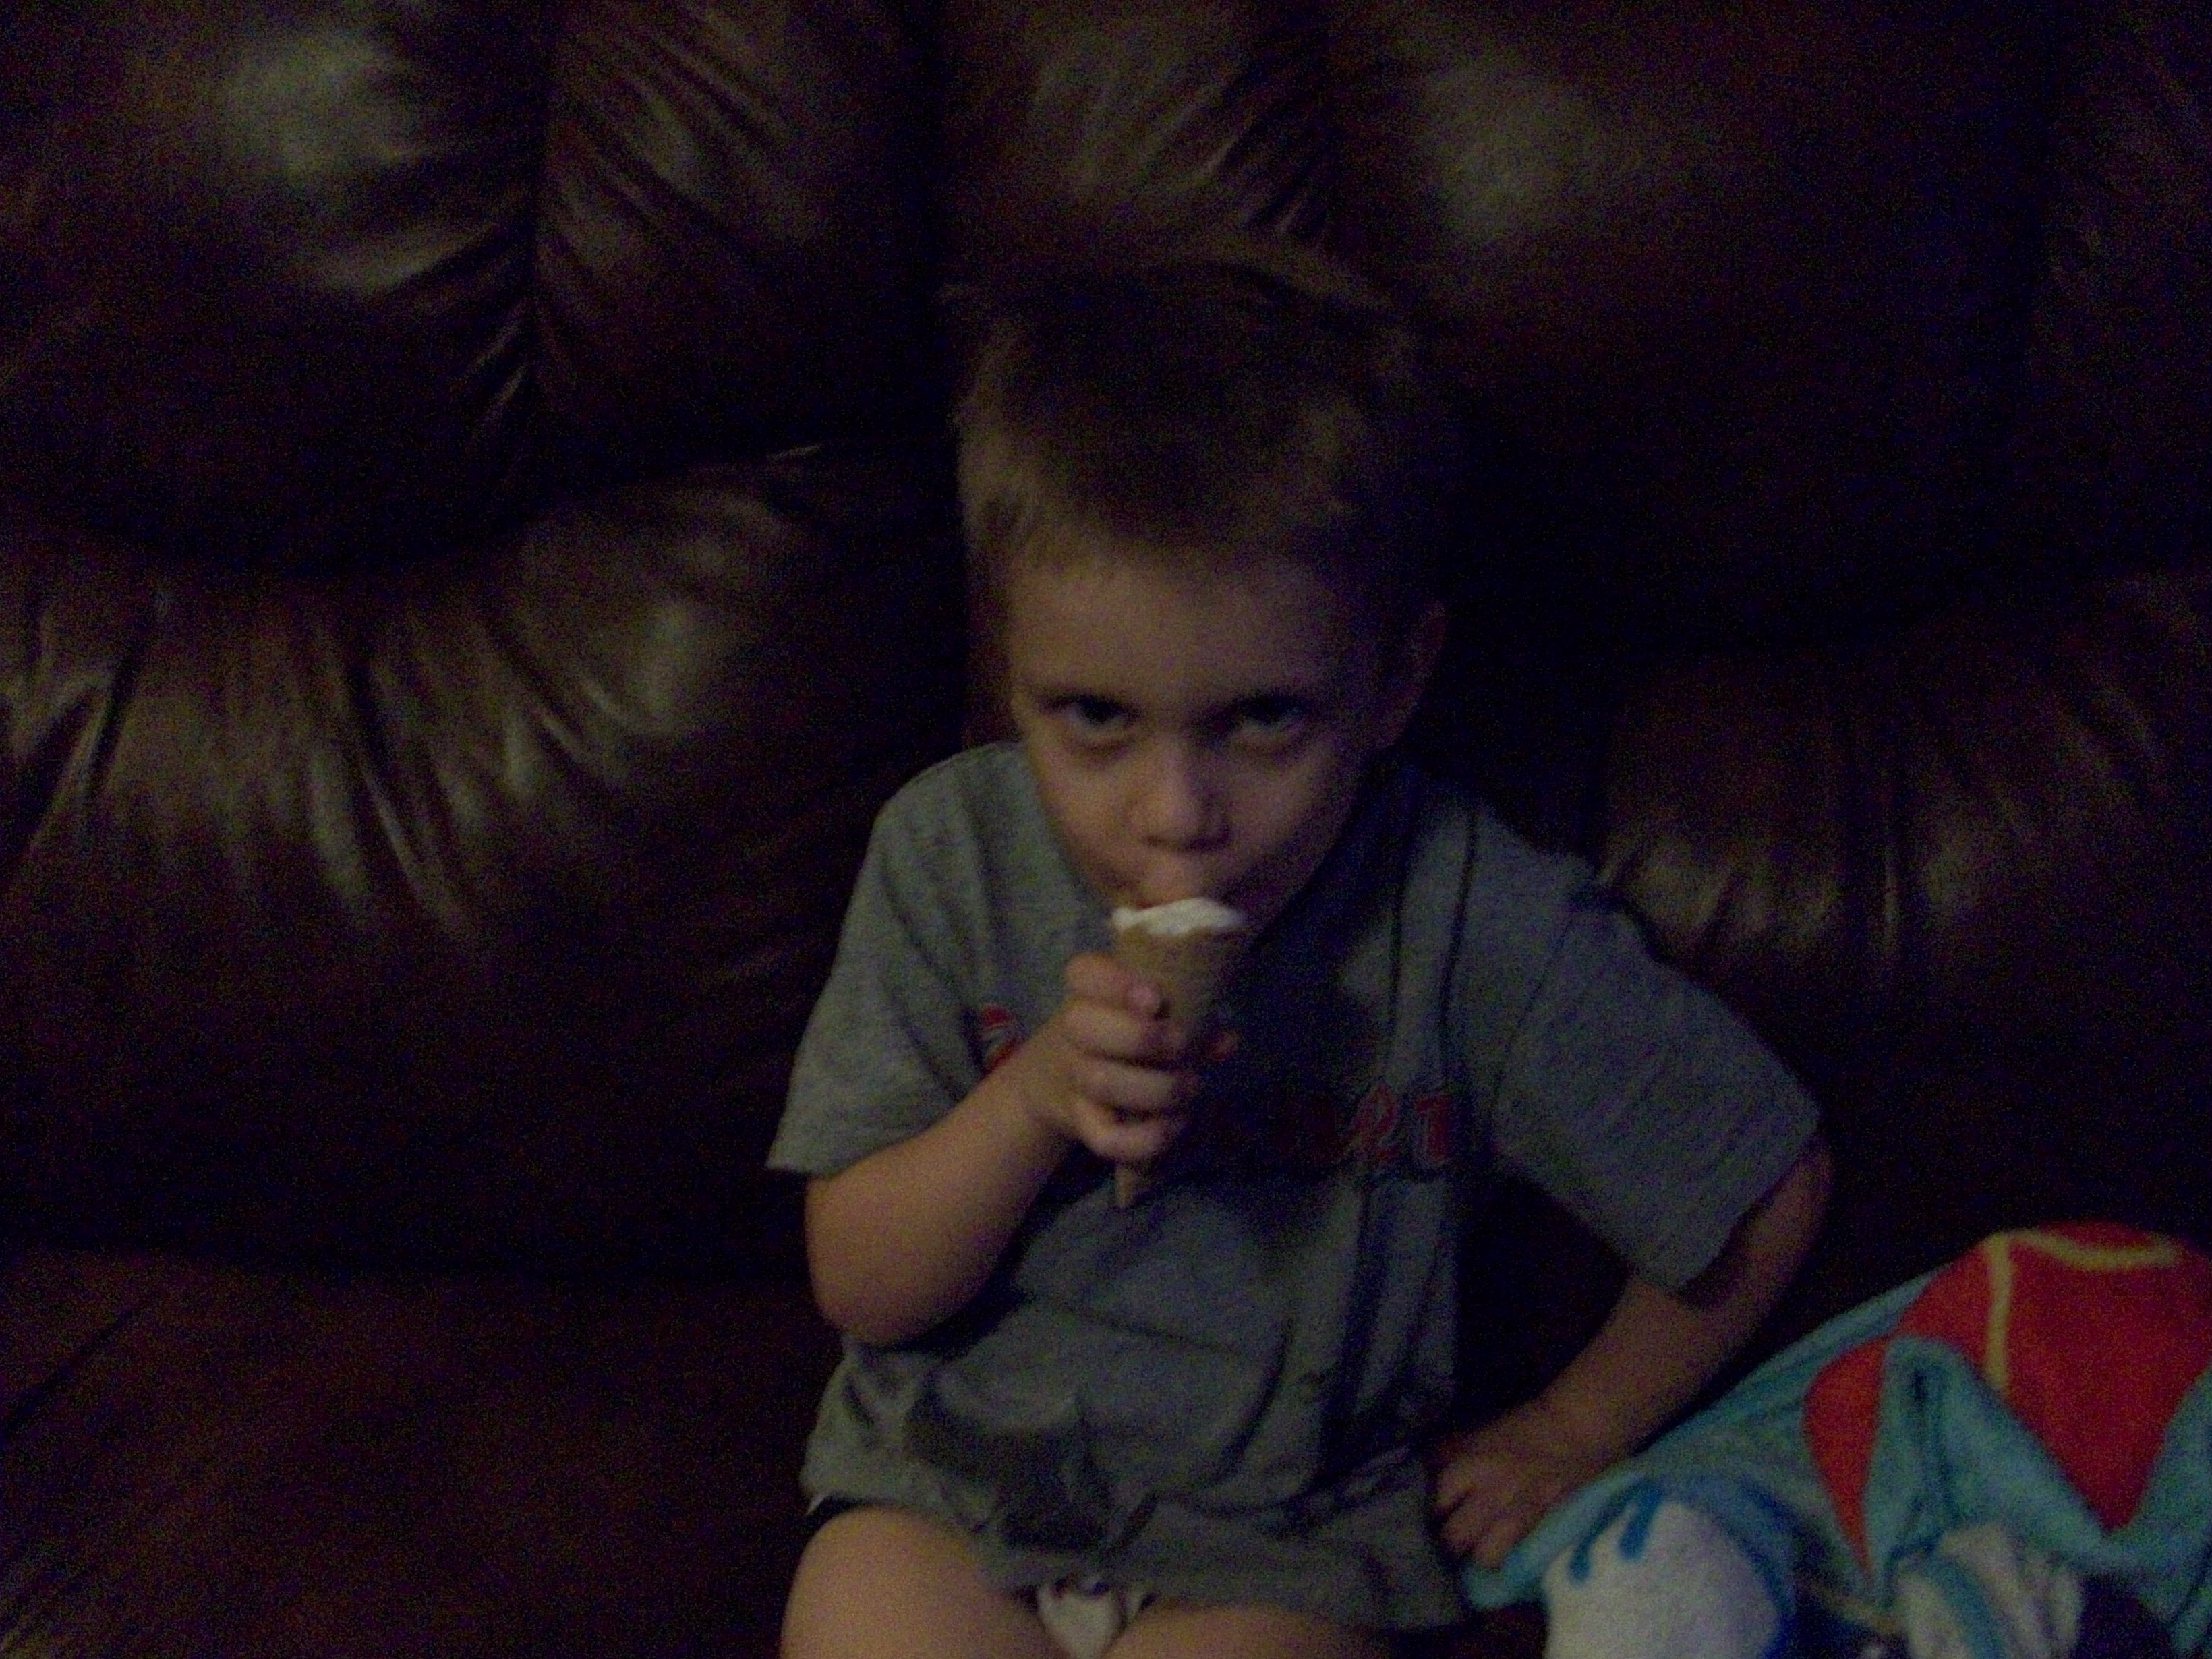 He prefers the sugar cones!